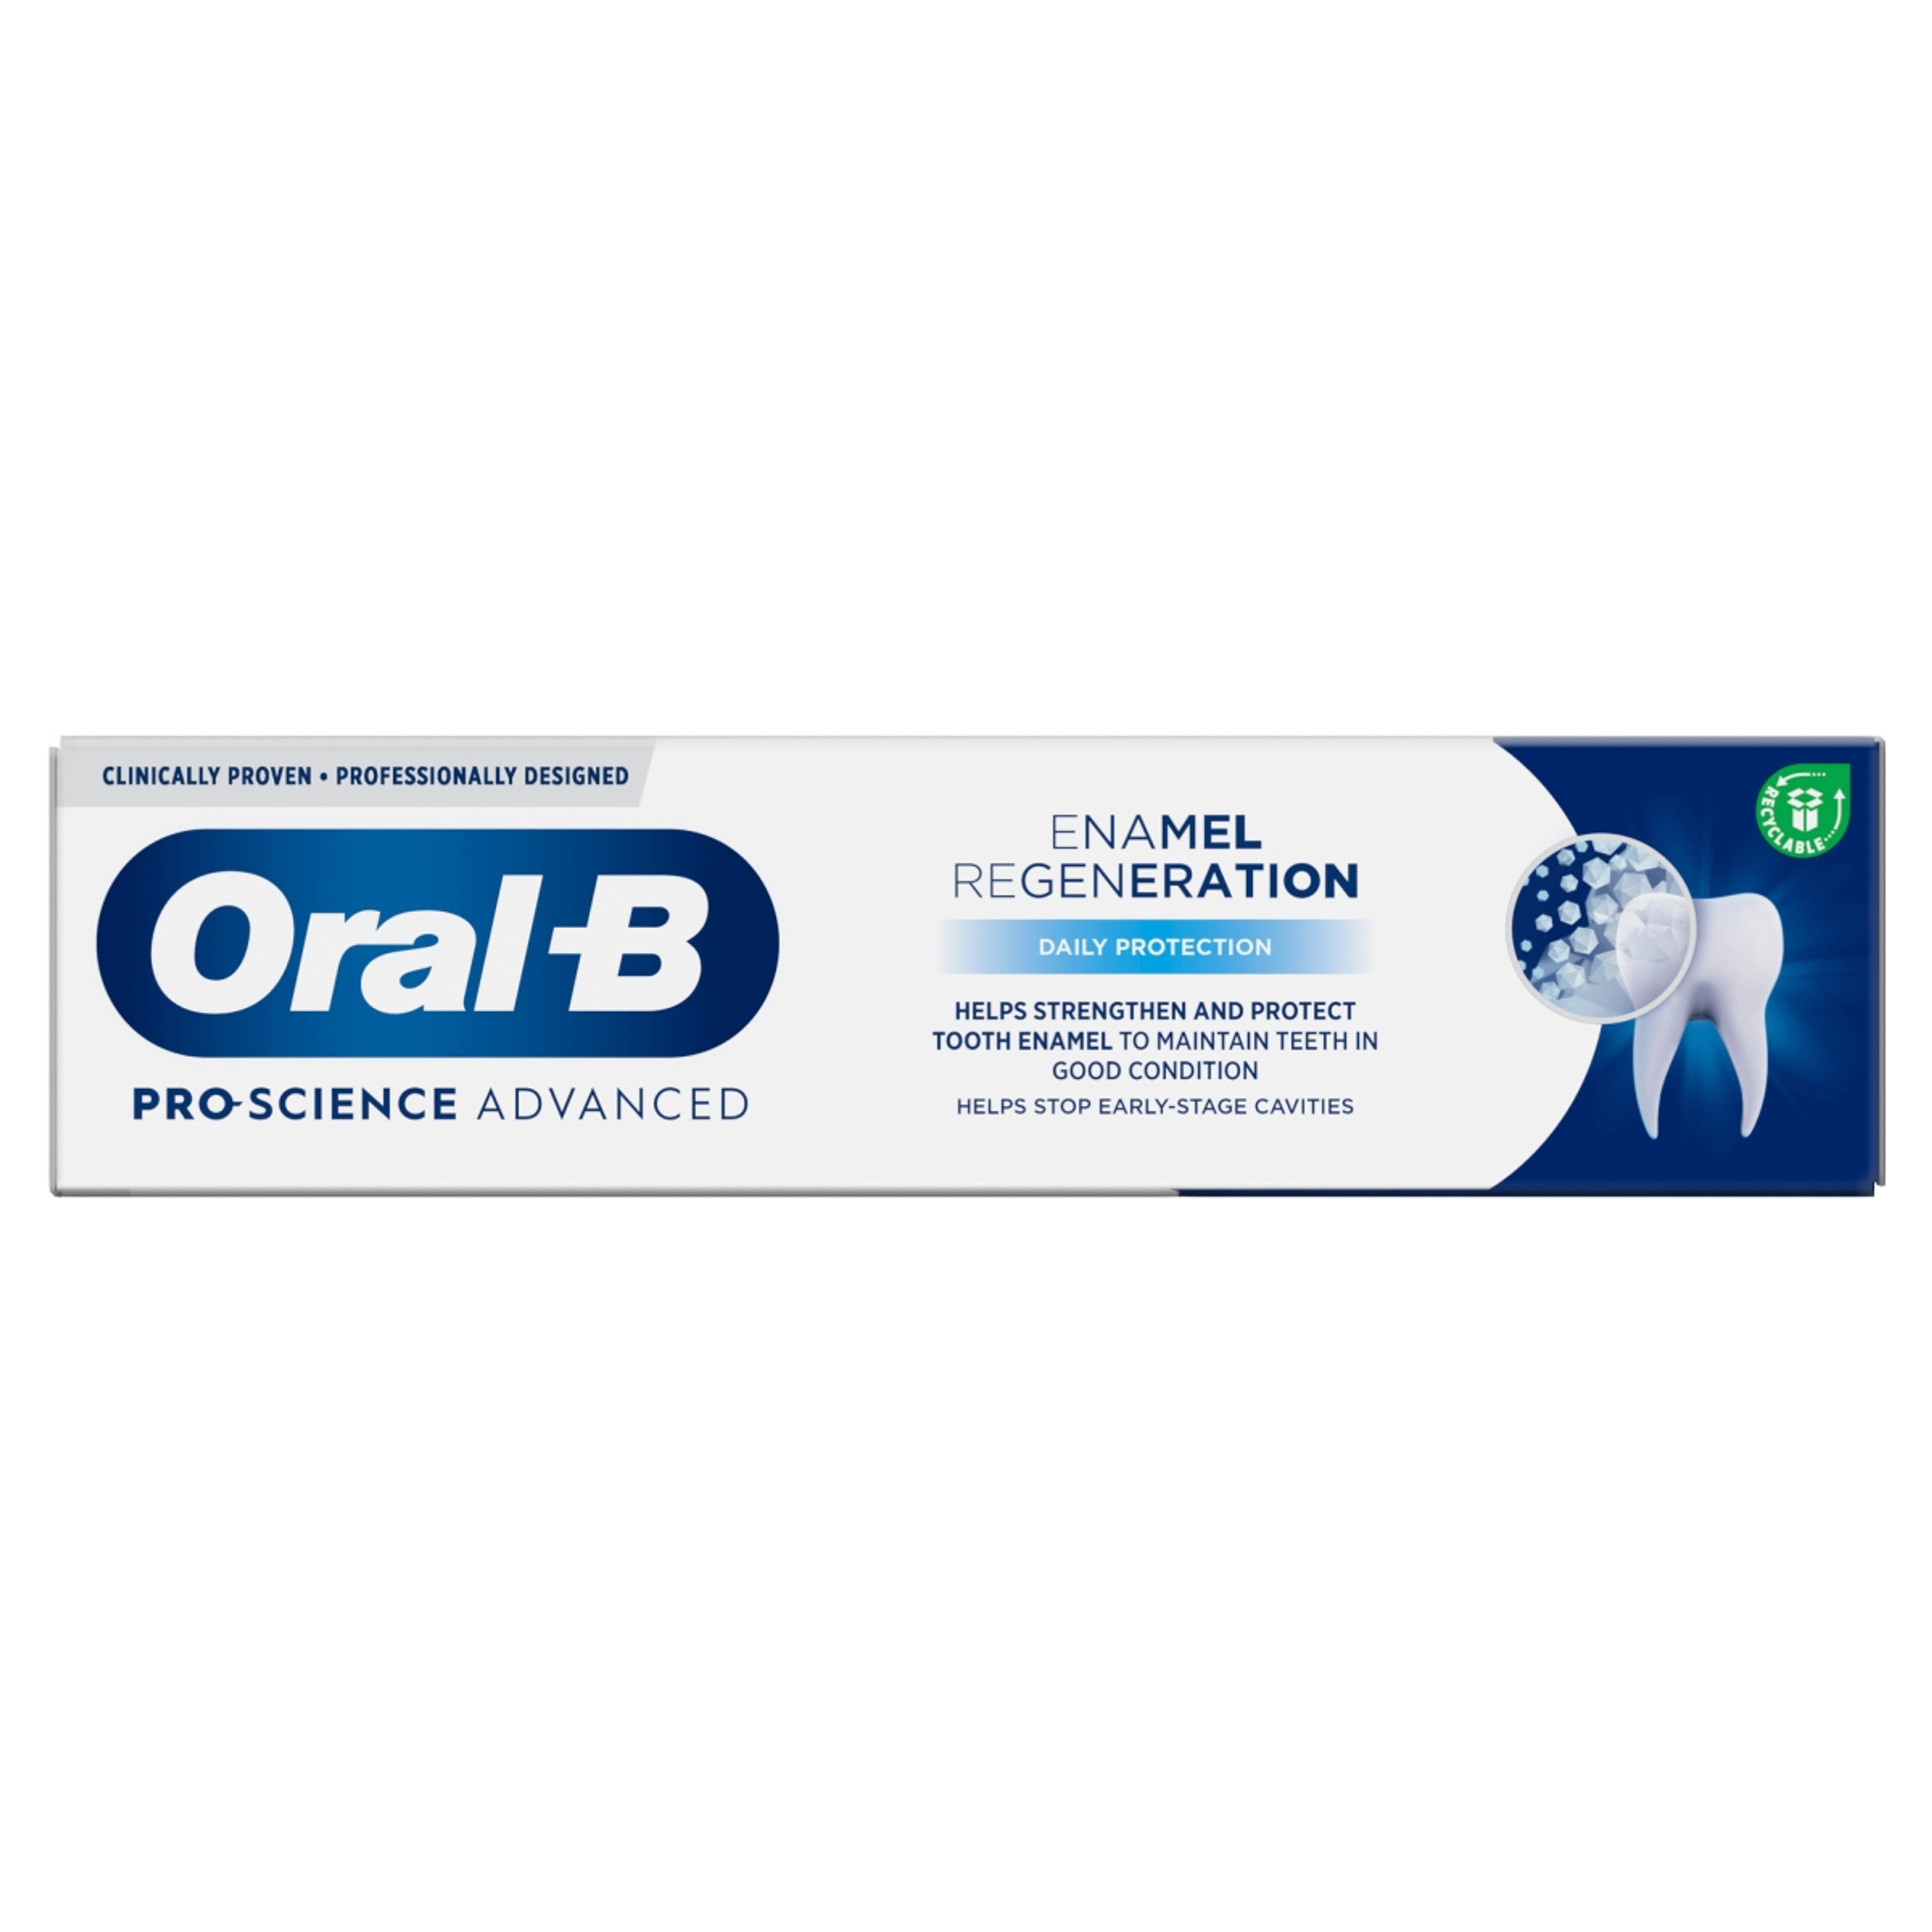 Oral-B Professional Regenerate Enamel Daily Protection fogkrém - 75 ml-2